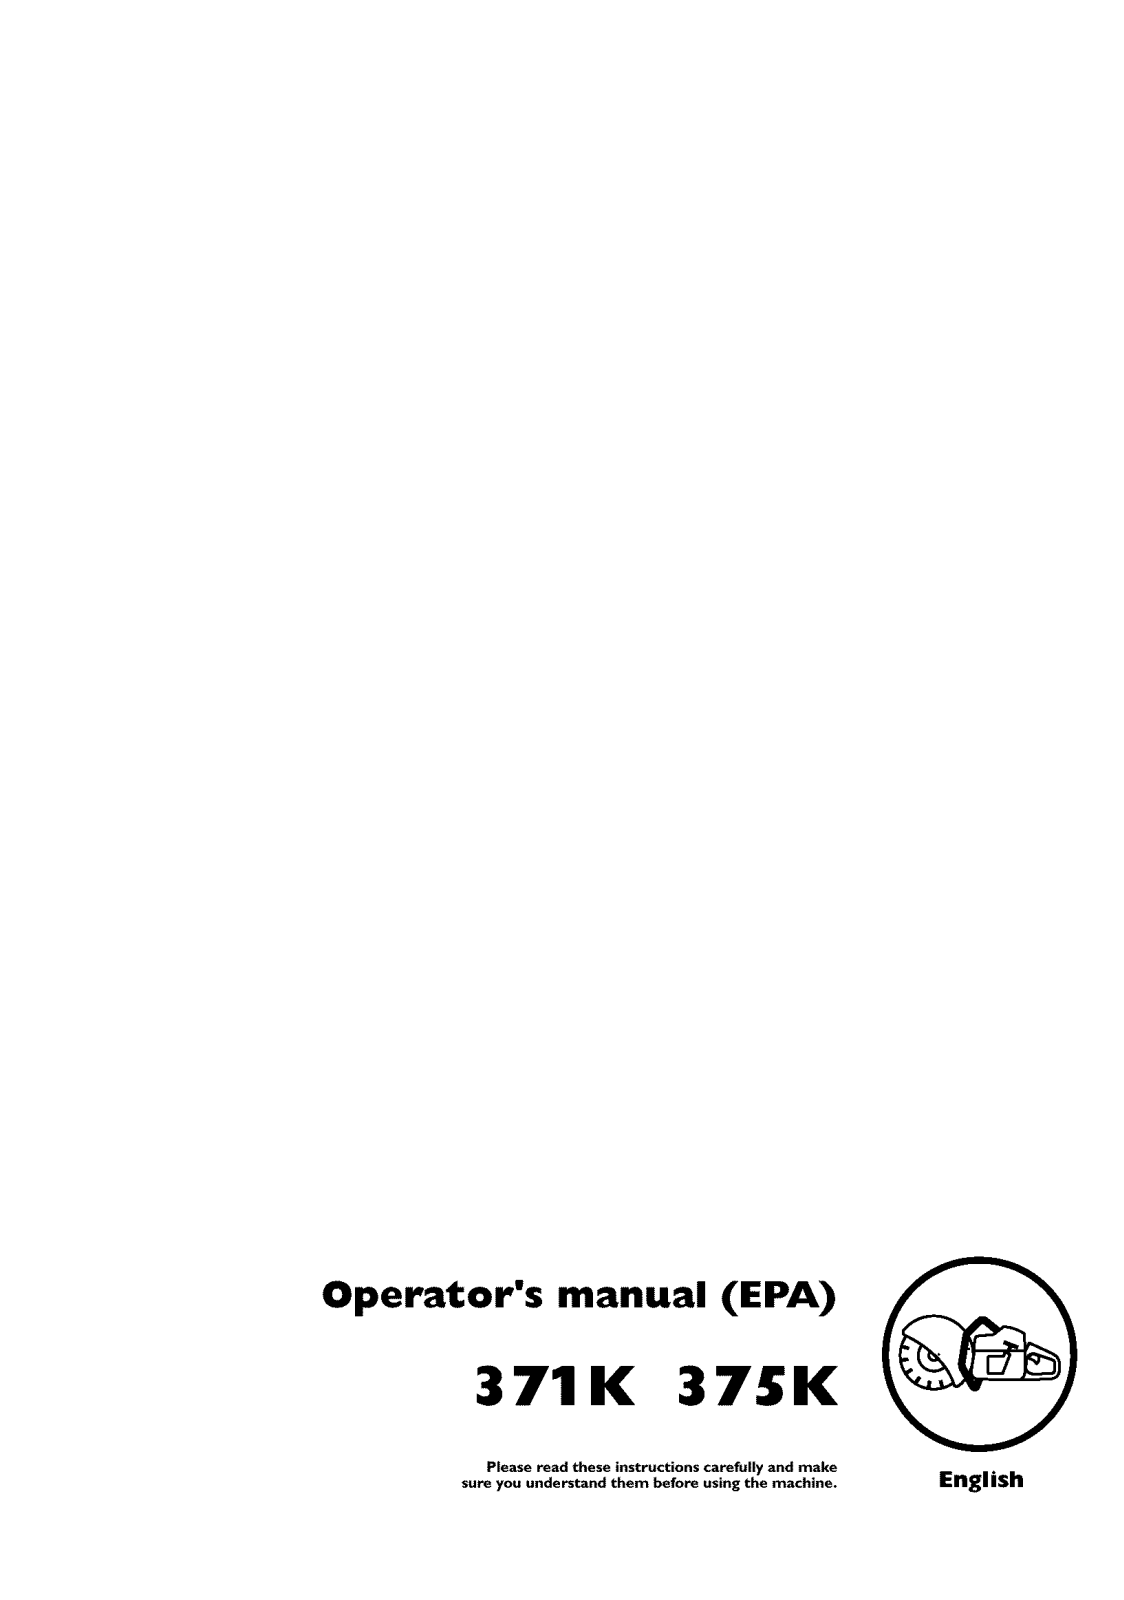 Husqvarna 375KEPA, 371K EPA Owner’s Manual